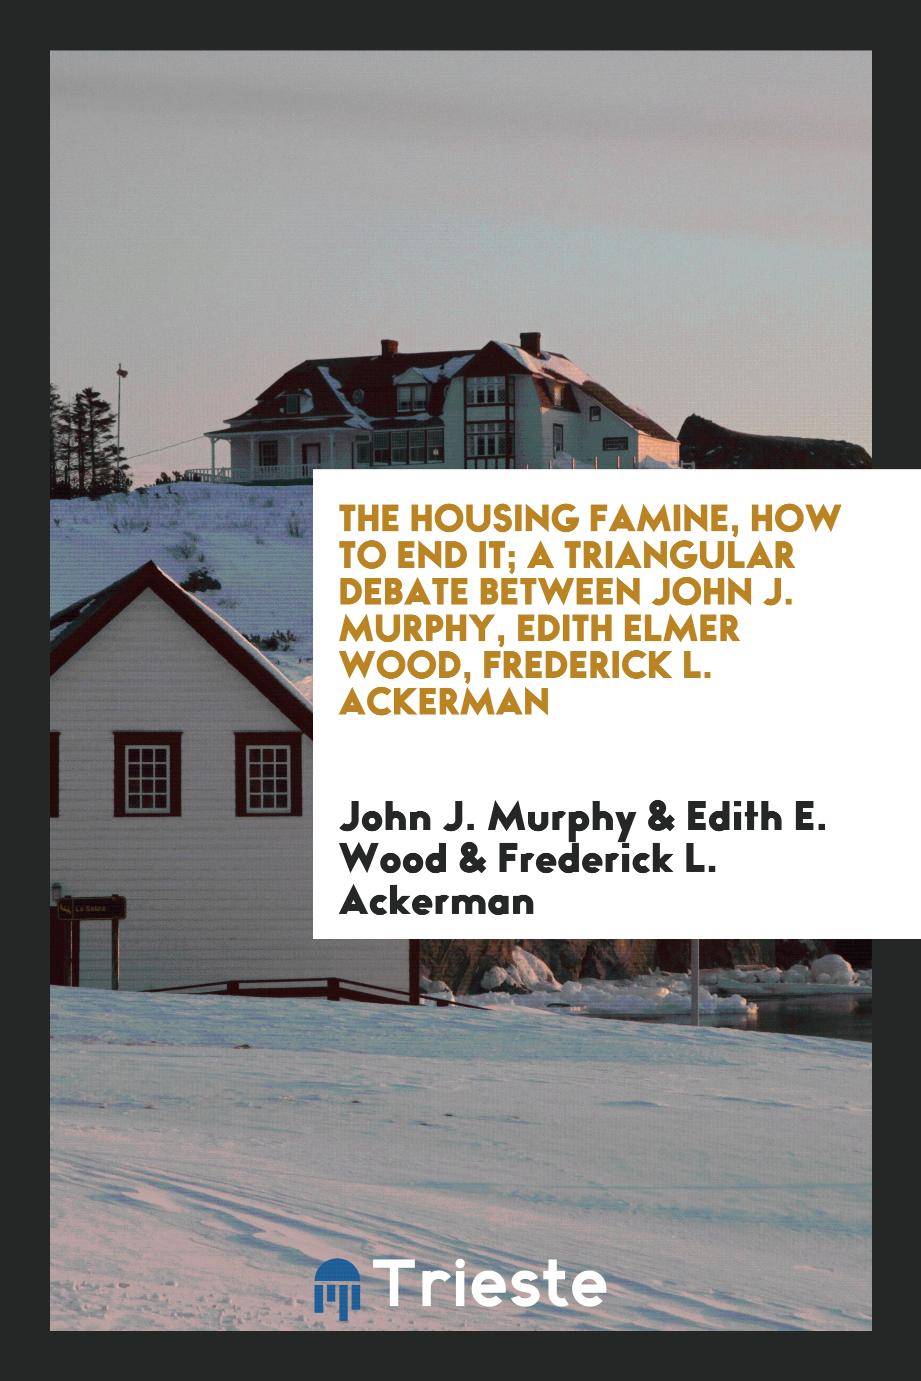 The housing famine, how to end it; a triangular debate between John J. Murphy, Edith Elmer Wood, Frederick L. Ackerman